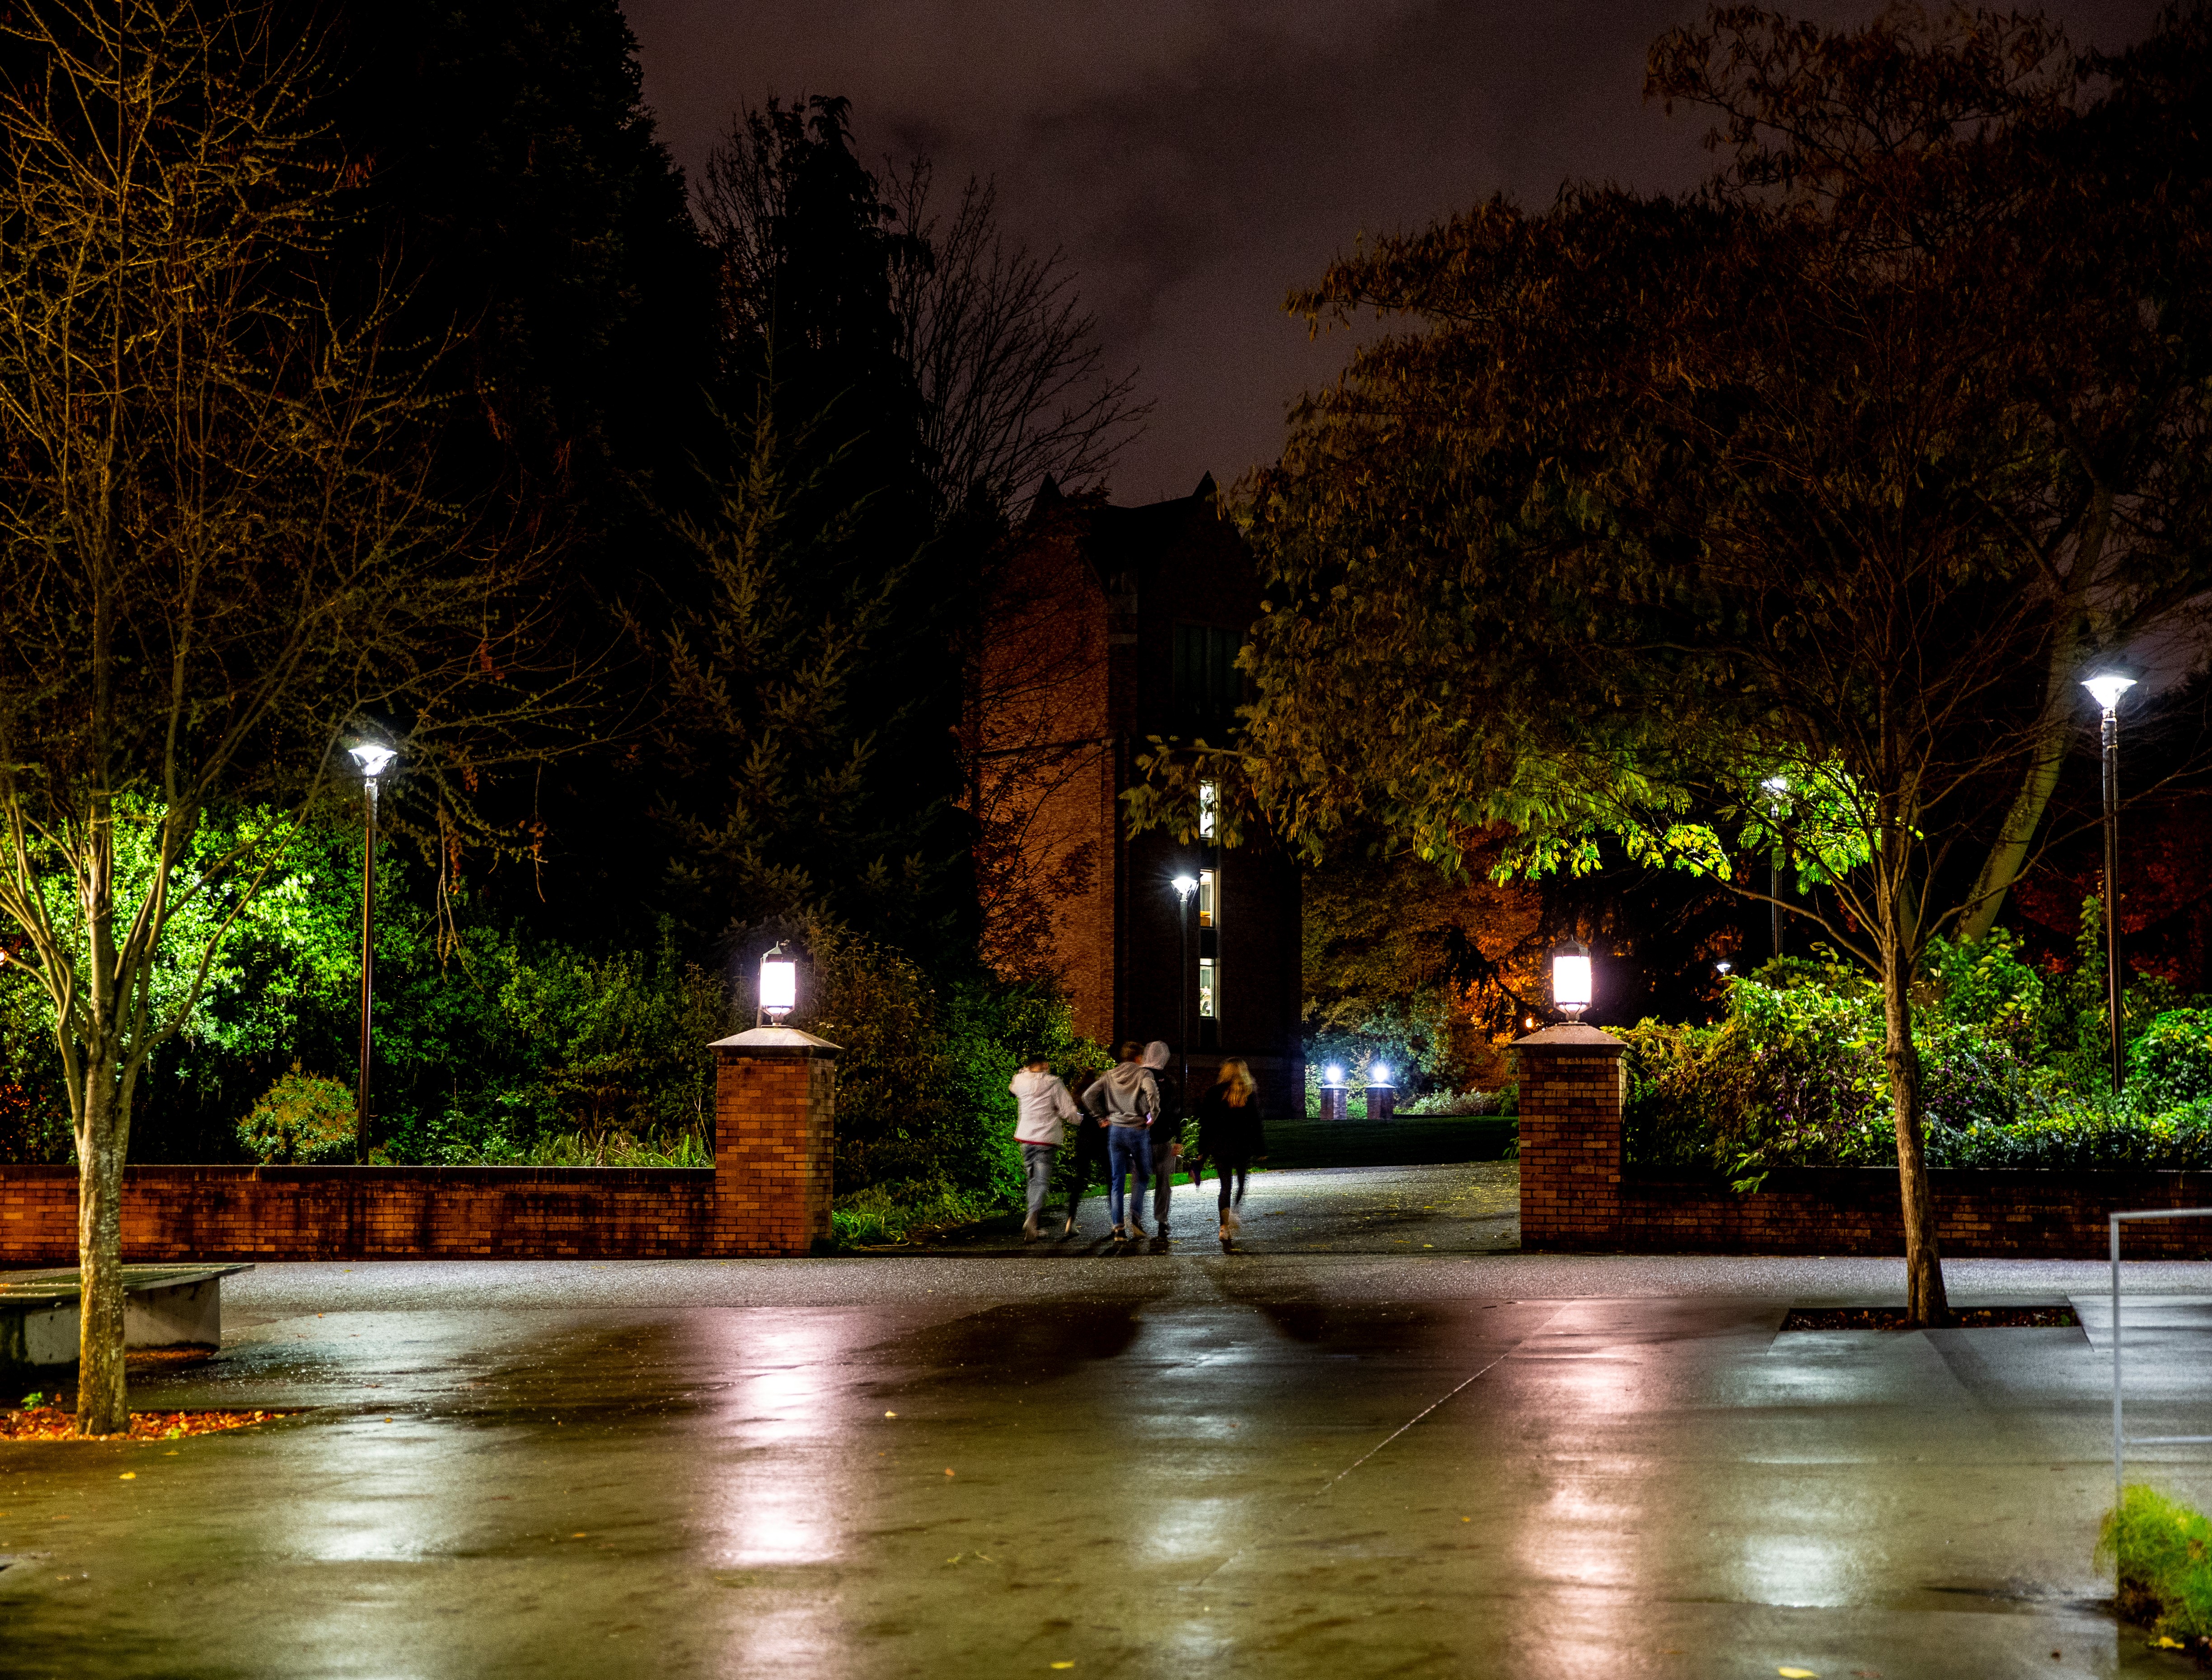 Students walking at night through campus.